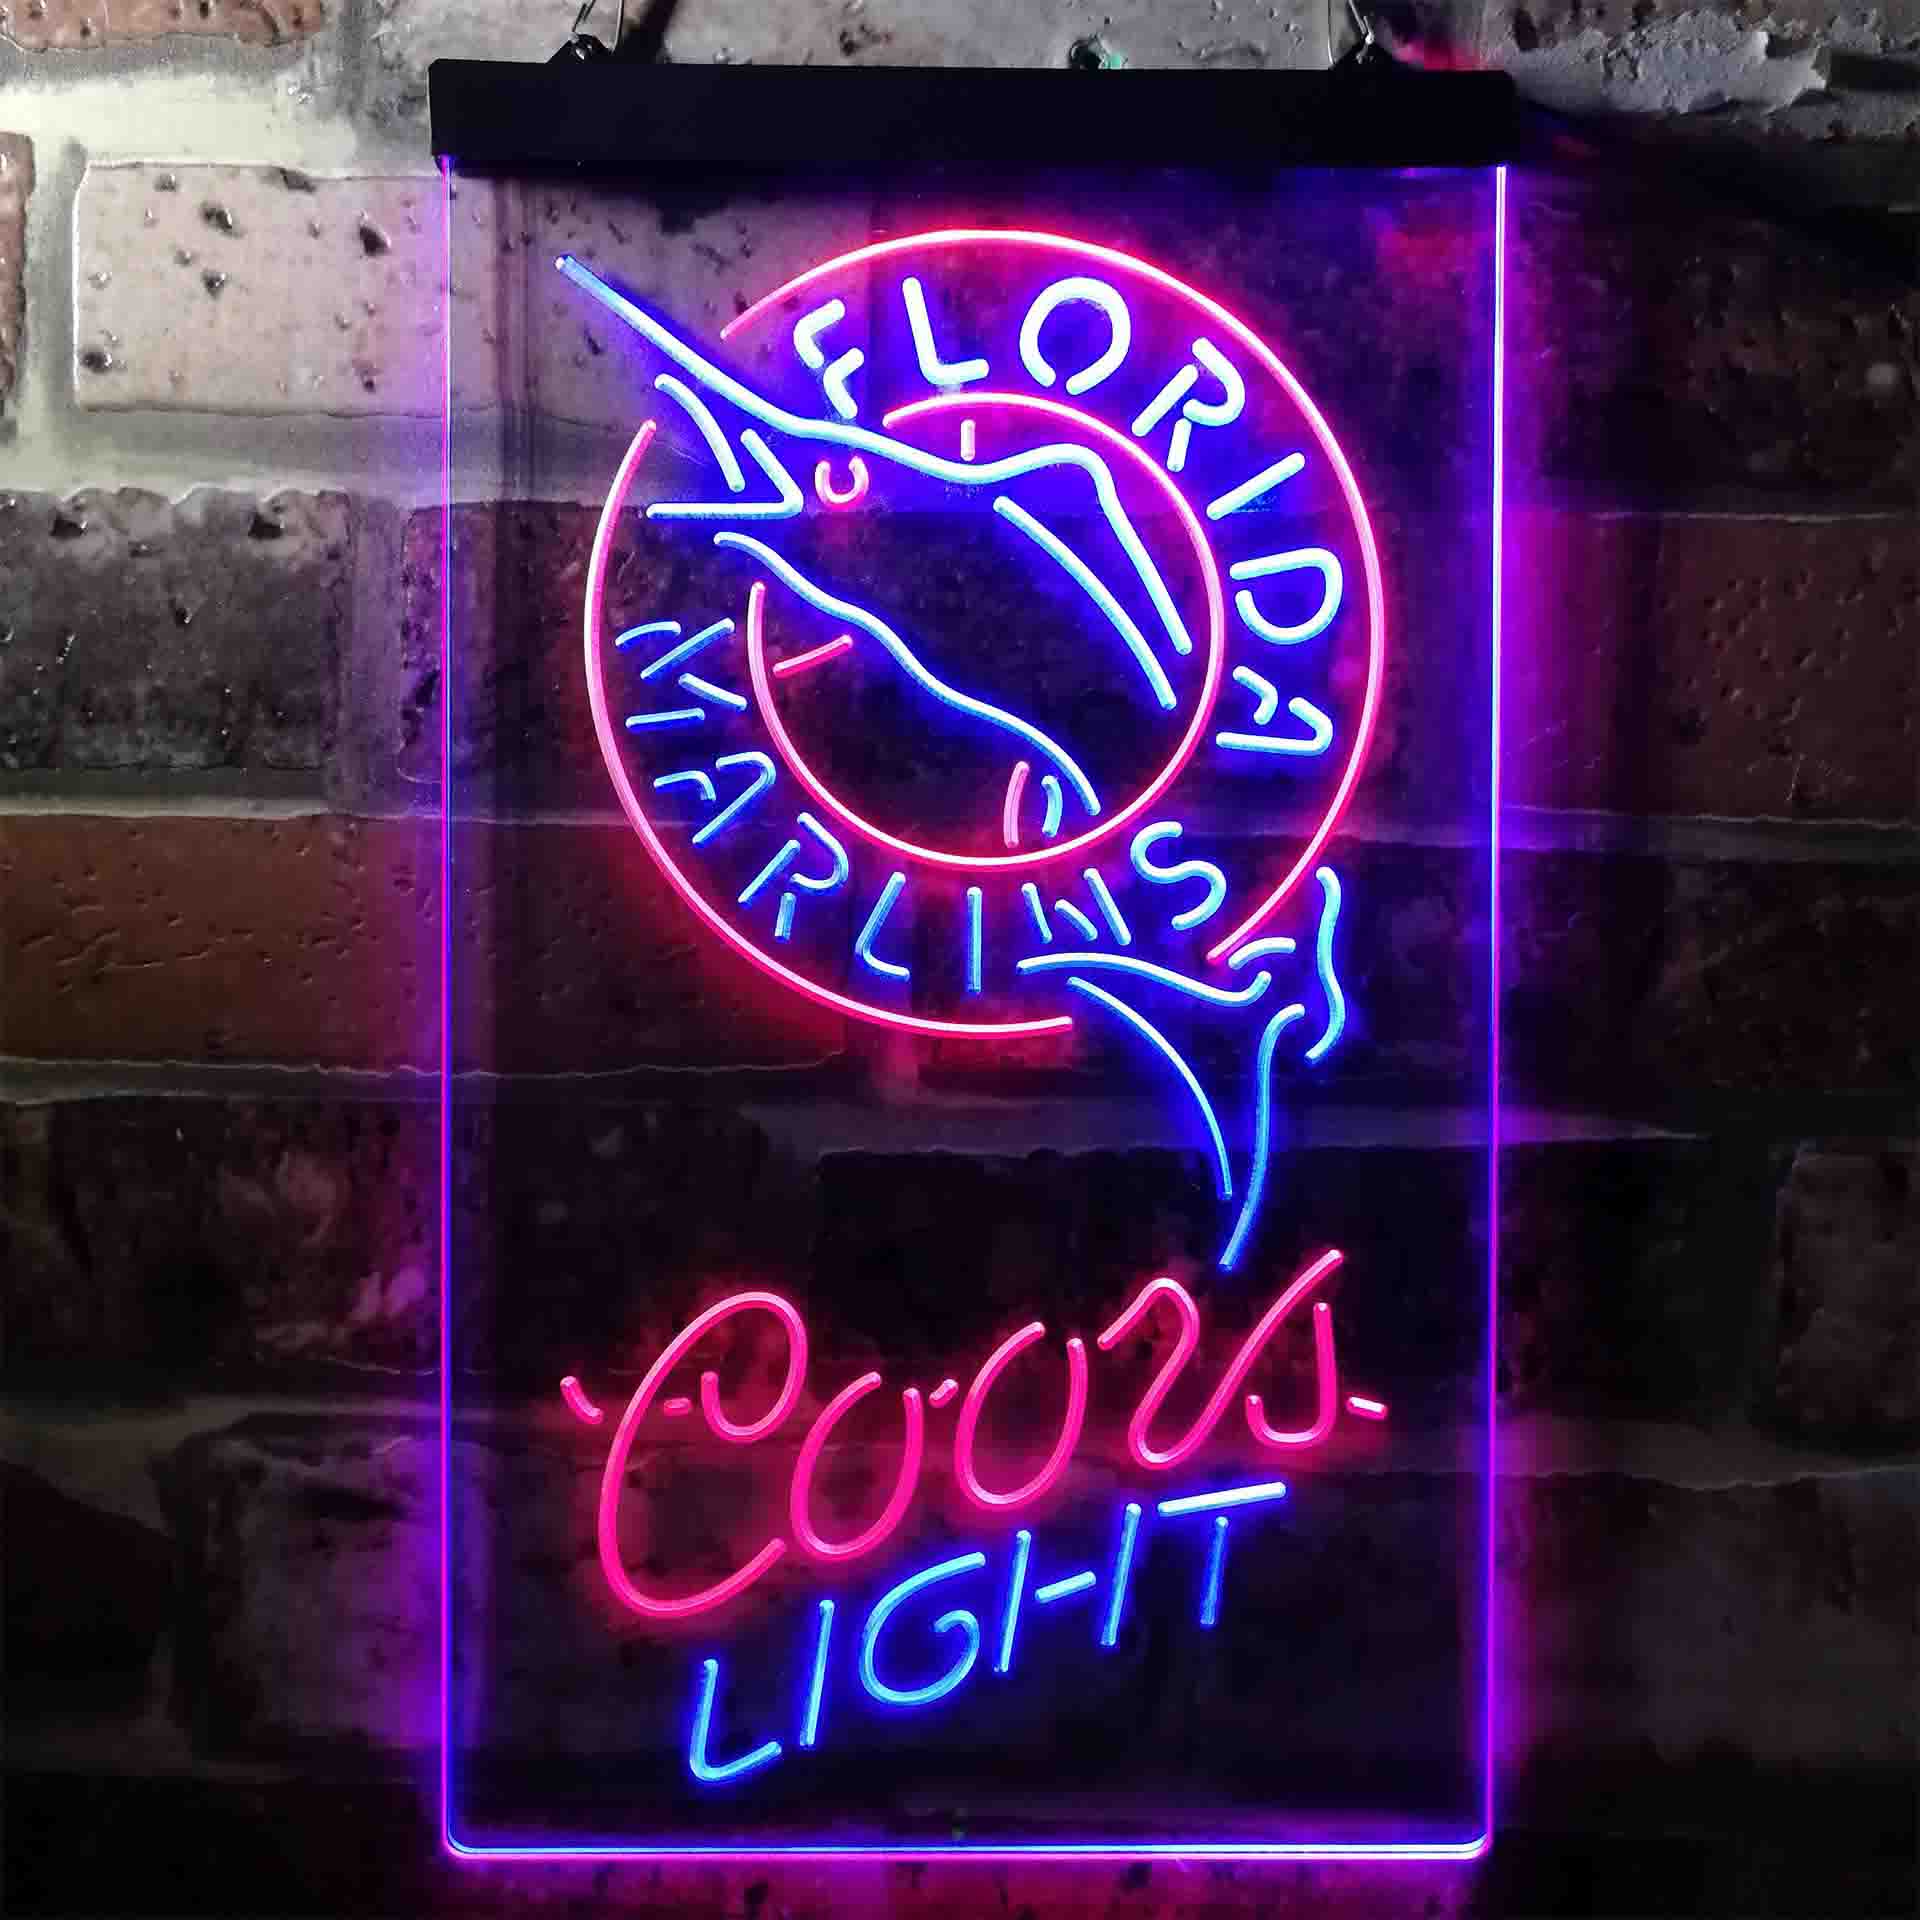 Florida Marlins Coors Light Neon-Like LED Sign